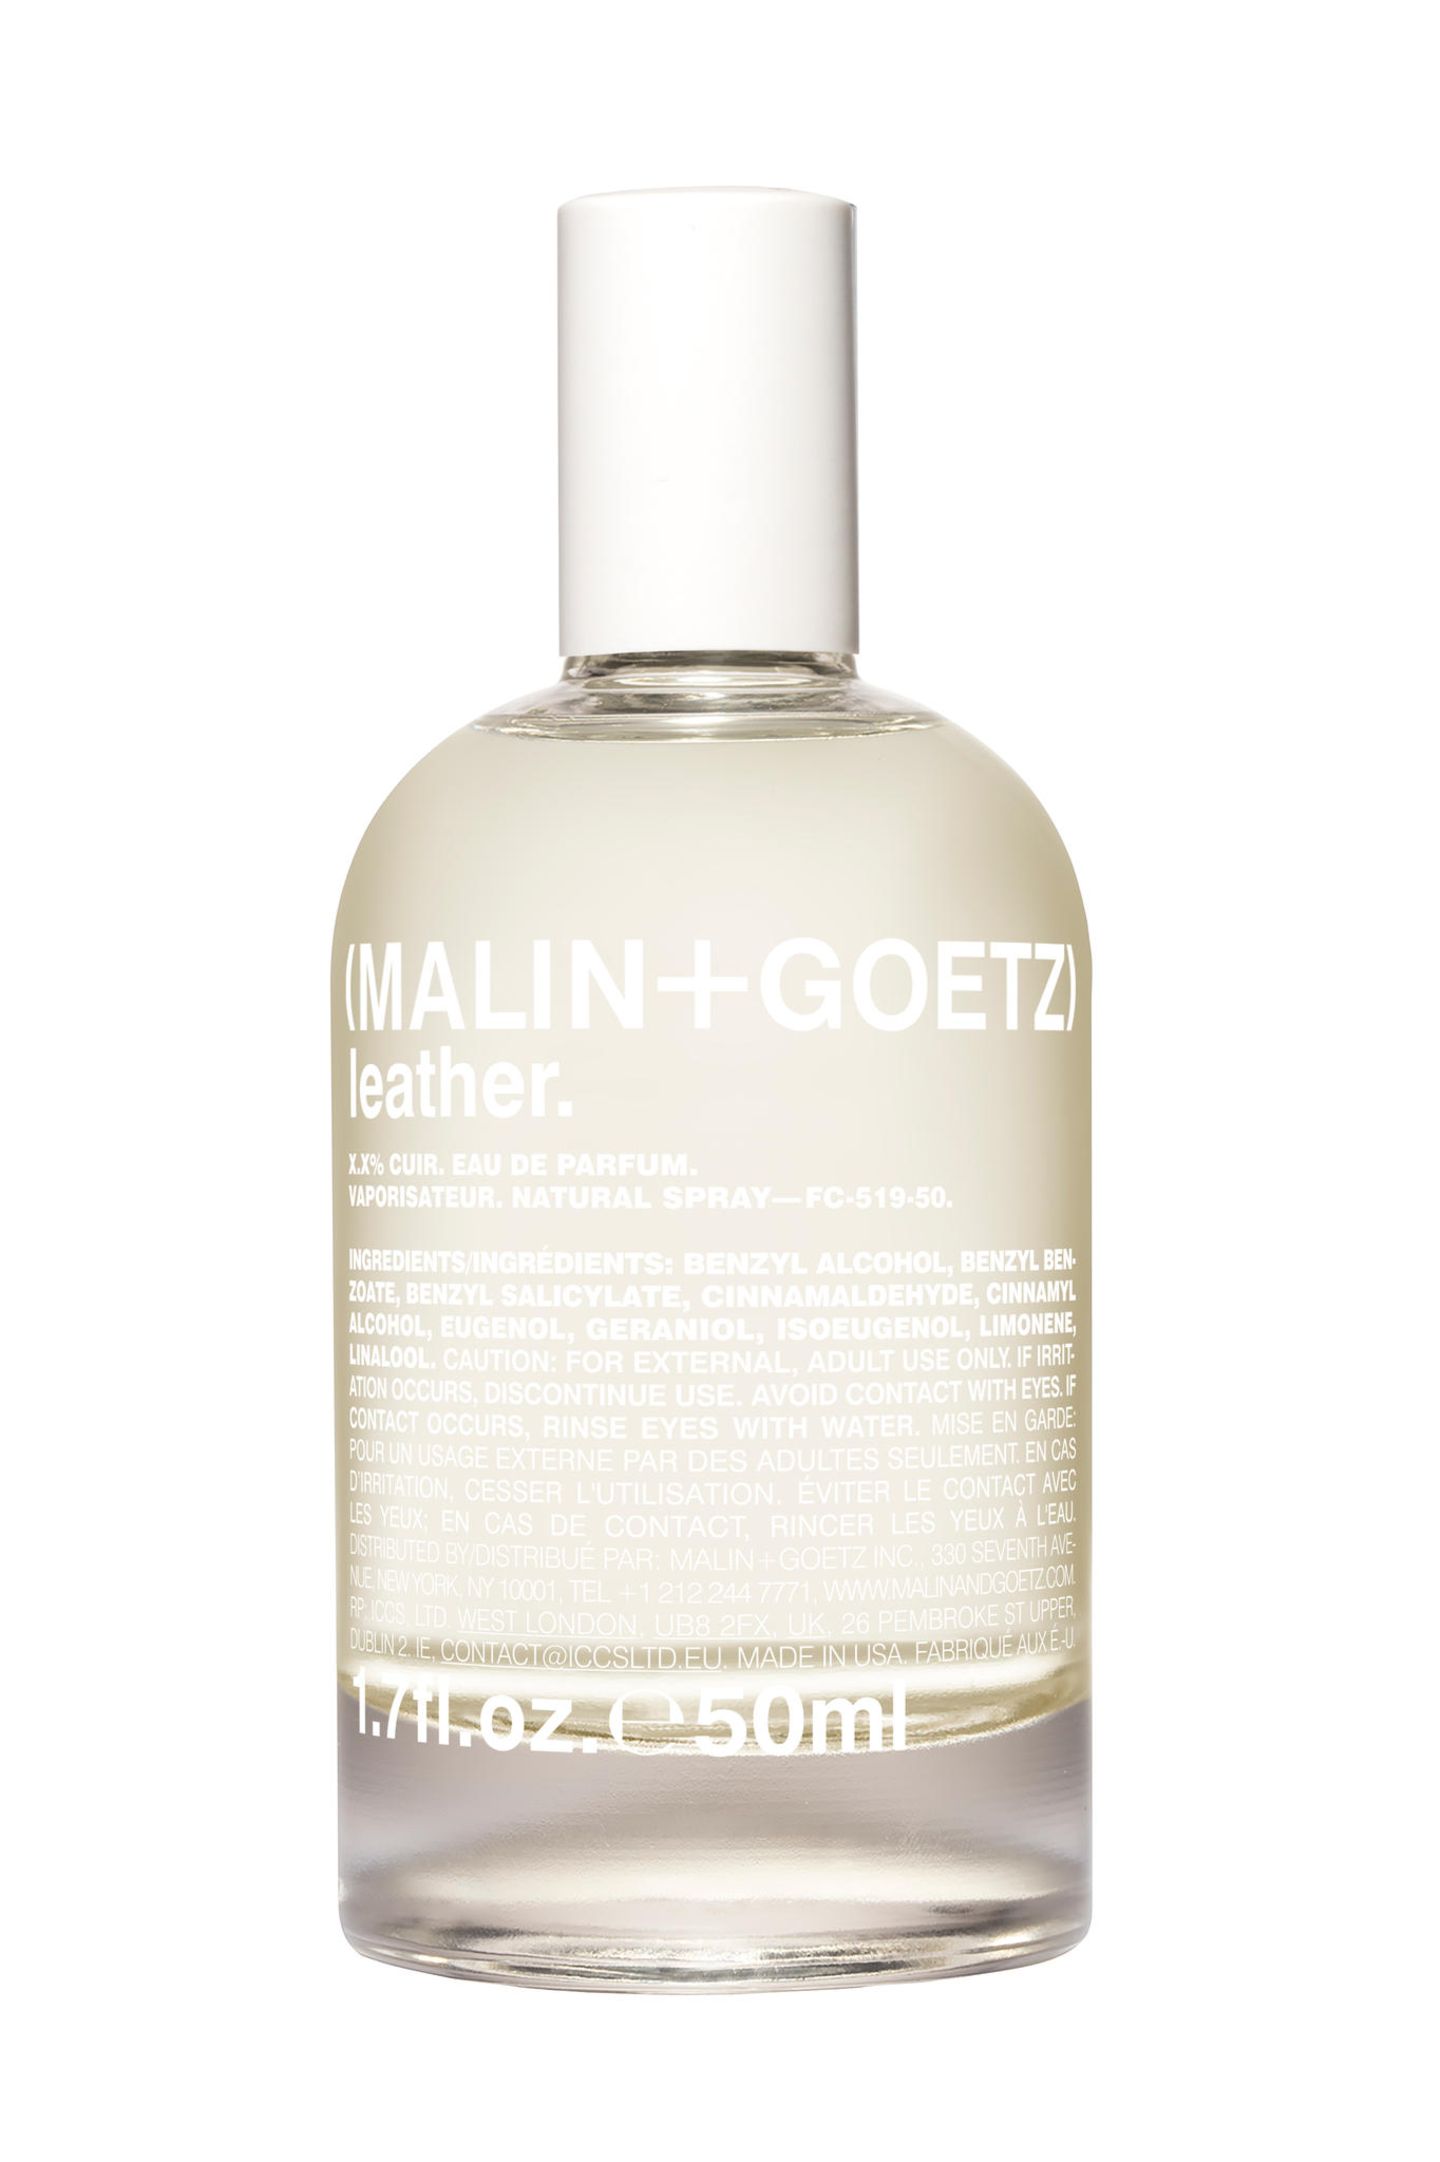 Malin + Goetz leather EdP